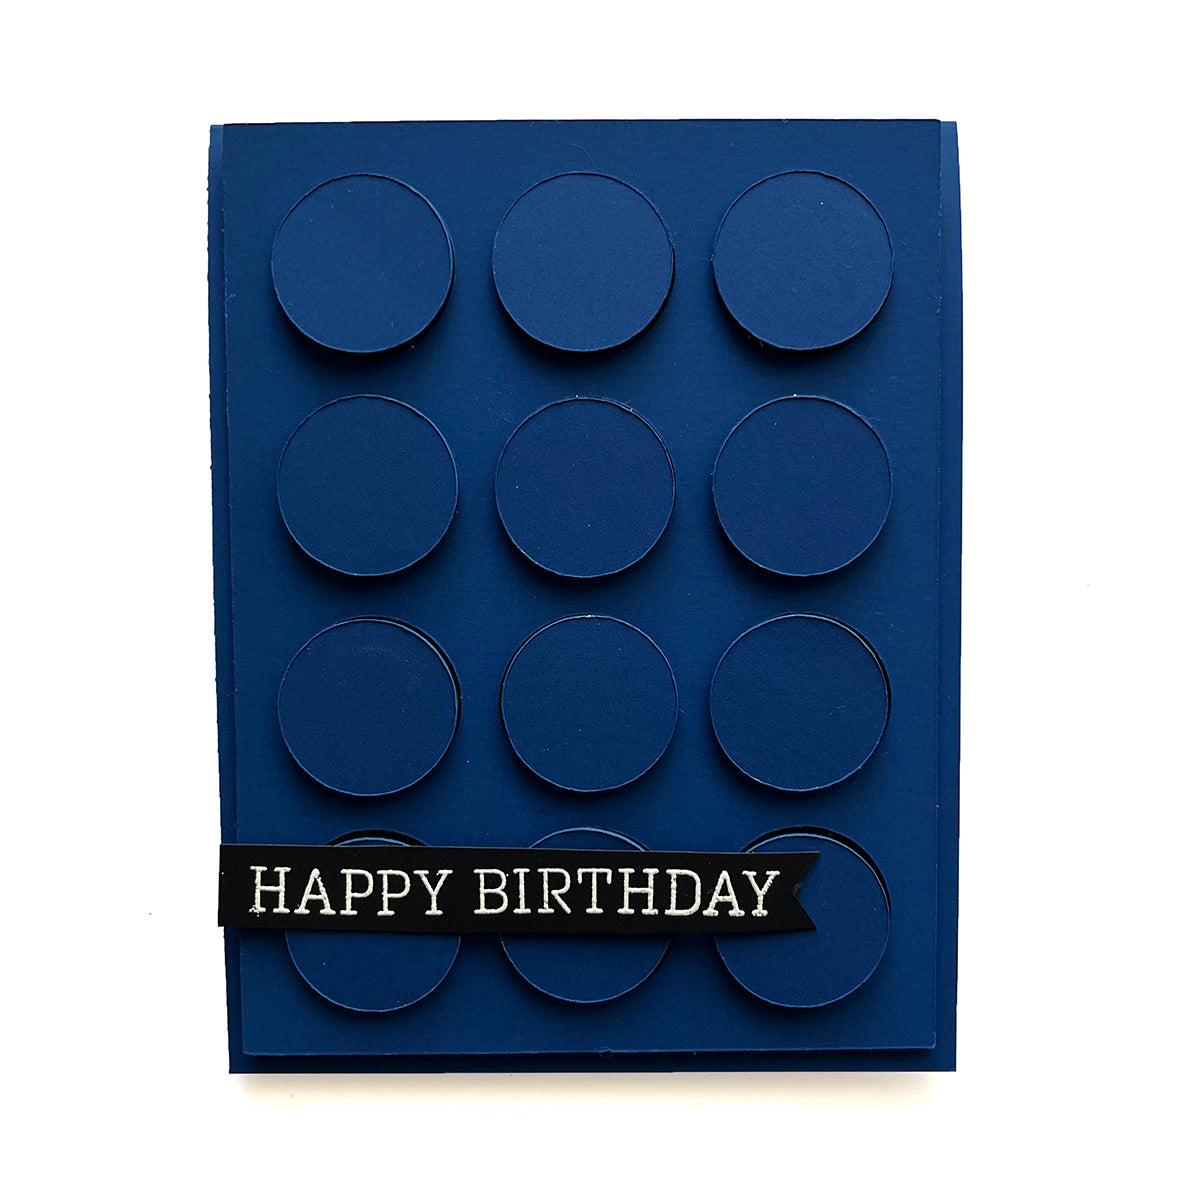 blue lego card featuring plike